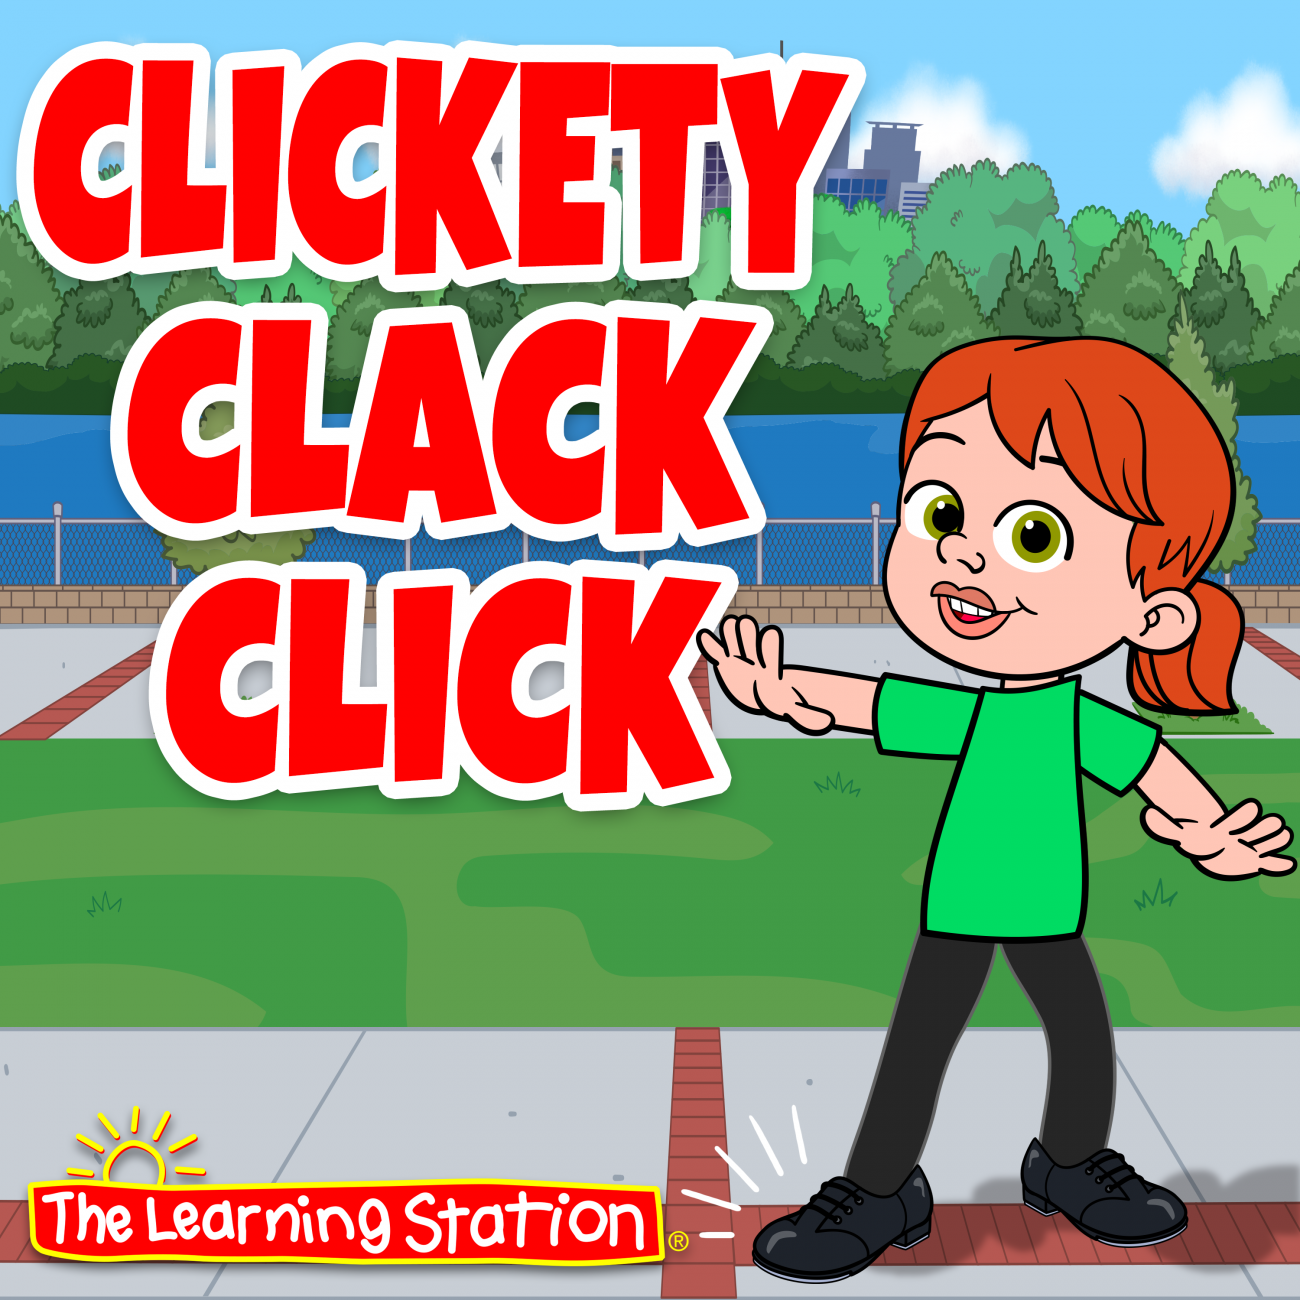 ClicketyClackClick Download 1300x1300 